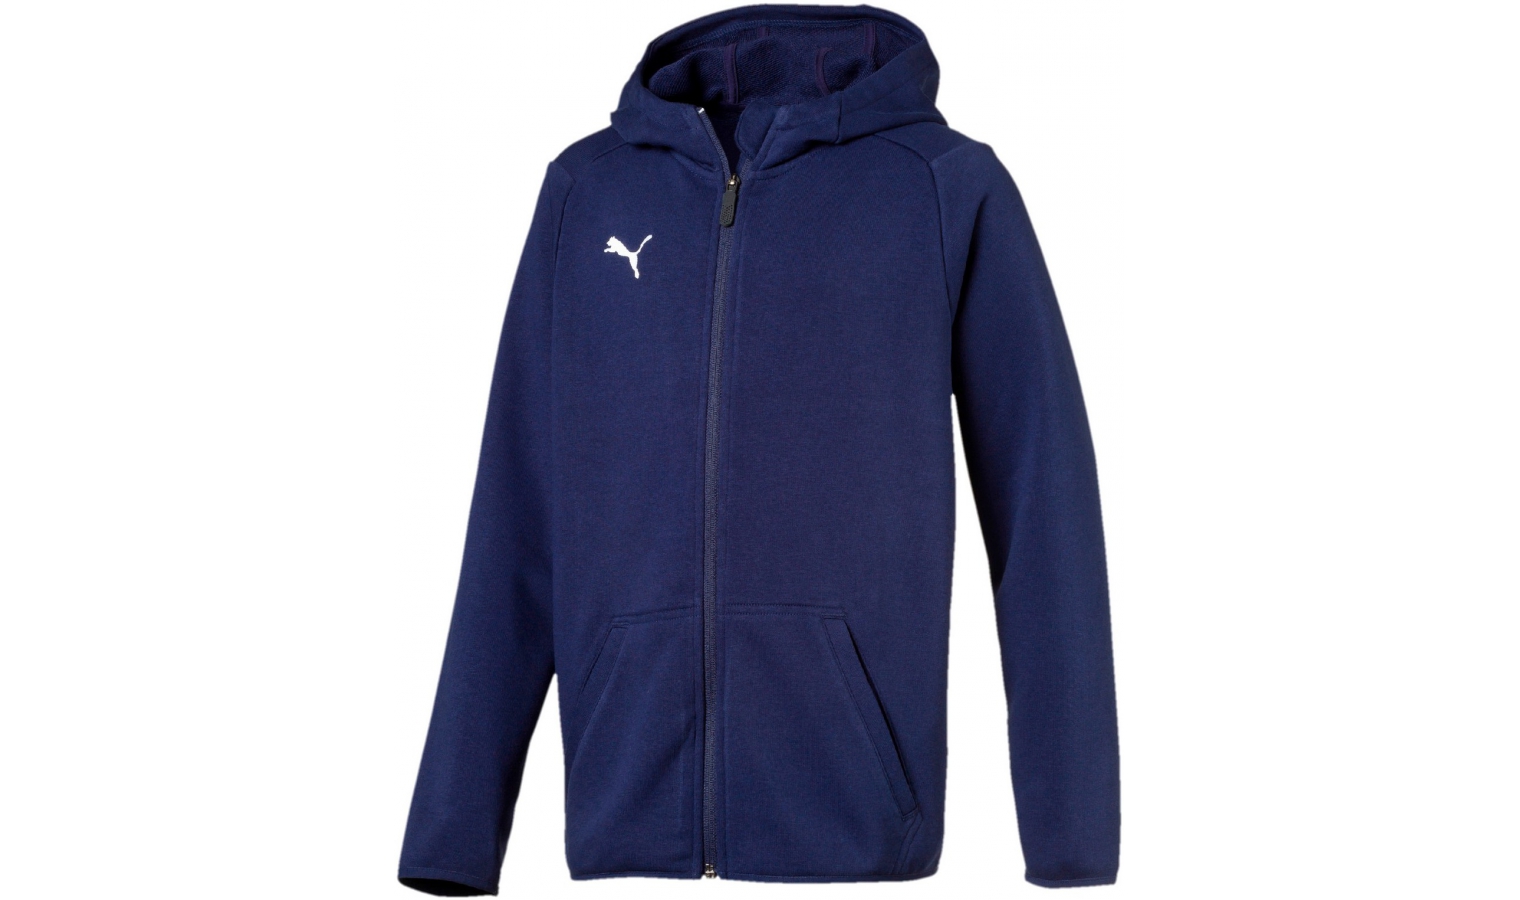 Kids sports jacket Puma LIGA CASUALS HOODY JACKET JR blue | AD Sport.store